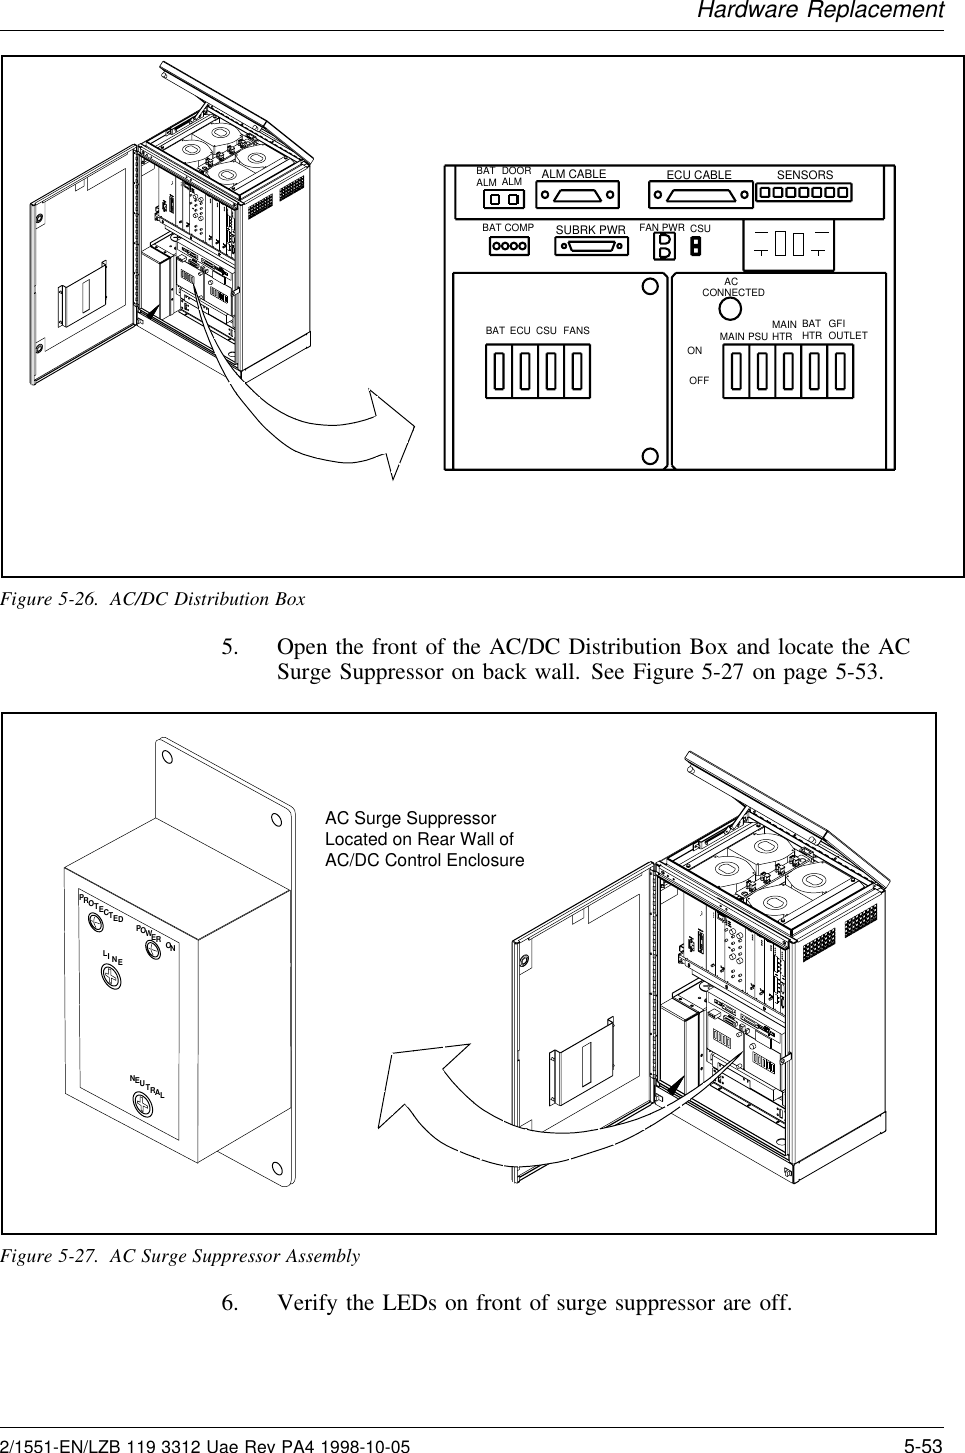 Hardware ReplacementALM CABLE ECU CABLESUBRK PWRFAN PWR CSUSENSORS        ACCONNECTEDMAIN PSU MAINHTR BATHTR GFIOUTLETBAT ECU CSU FANSBAT COMPBATALM DOOR ALMONOFFFigure 5-26. AC/DC Distribution Box5. Open the front of the AC/DC Distribution Box and locate the ACSurge Suppressor on back wall. See Figure 5-27 on page 5-53.AC Surge SuppressorLocated on Rear Wall ofAC/DC Control EnclosurePROTECTEDPOWERONLINENEUTRALFigure 5-27. AC Surge Suppressor Assembly6. Verify the LEDs on front of surge suppressor are off.2/1551-EN/LZB 119 3312 Uae Rev PA4 1998-10-05 5-53